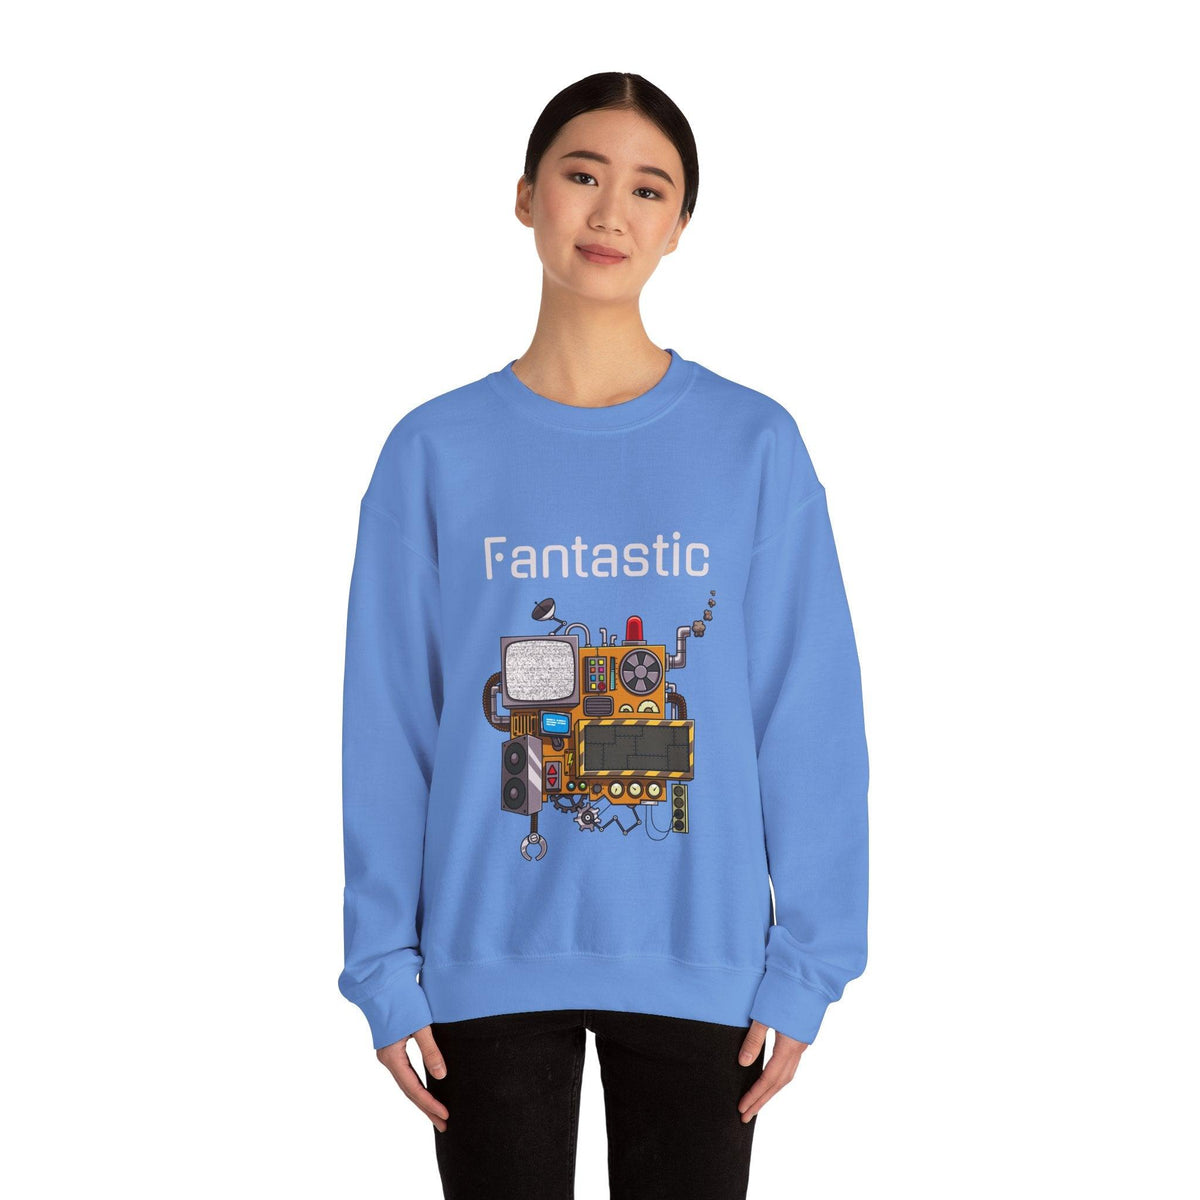 F™ Crewneck Sweatshirt - Benty LTD